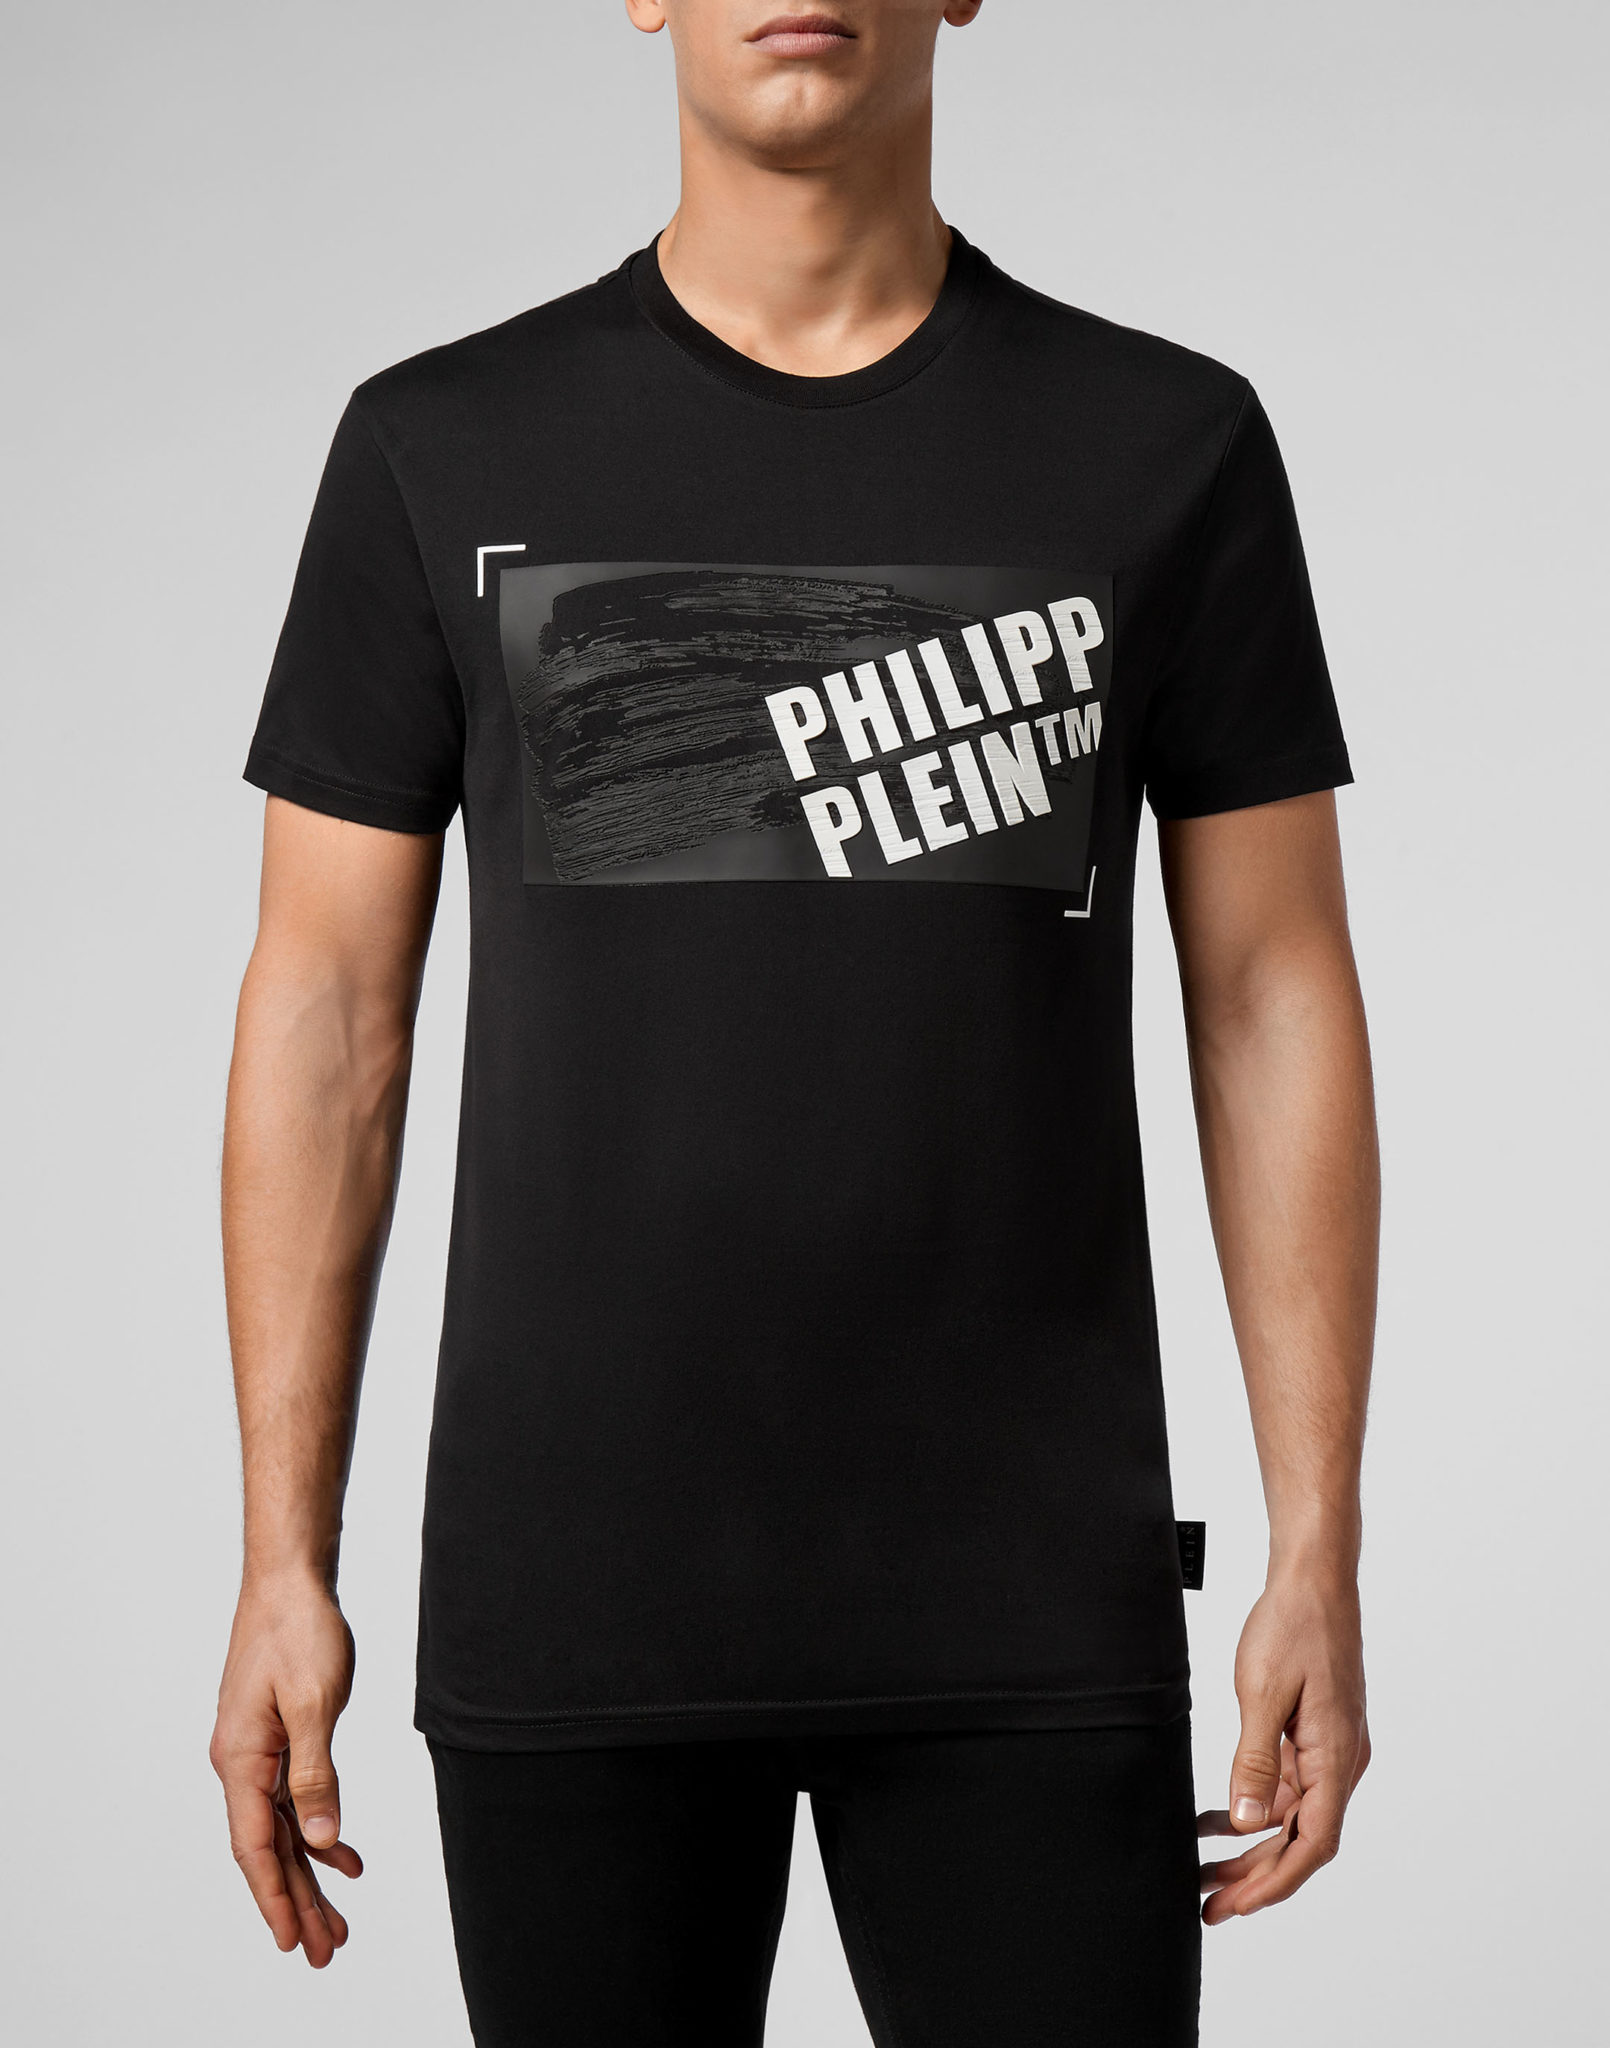 PHILIPP PLEIN - T-SHIRT ROUND NECK SS - חנות מותגים אונליין לבגדי מותגים בחדרה - הכי בעיר